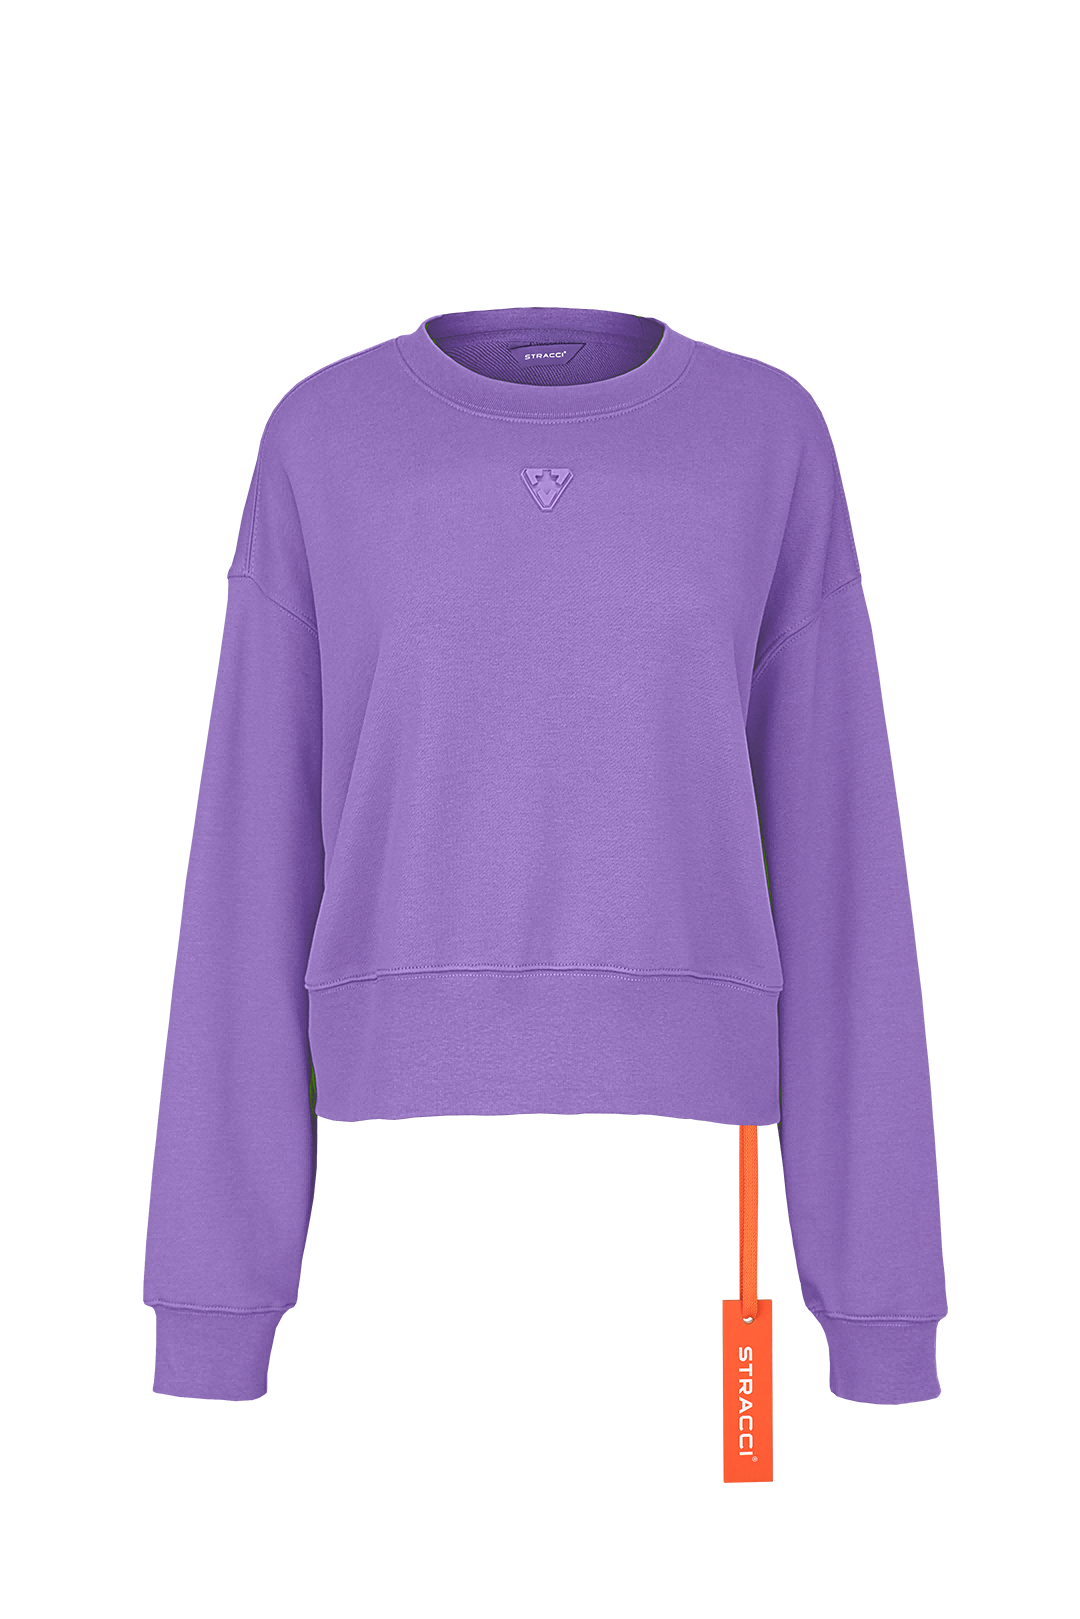 15# Arrows Women's Cropped Round Neck Sweatshirt